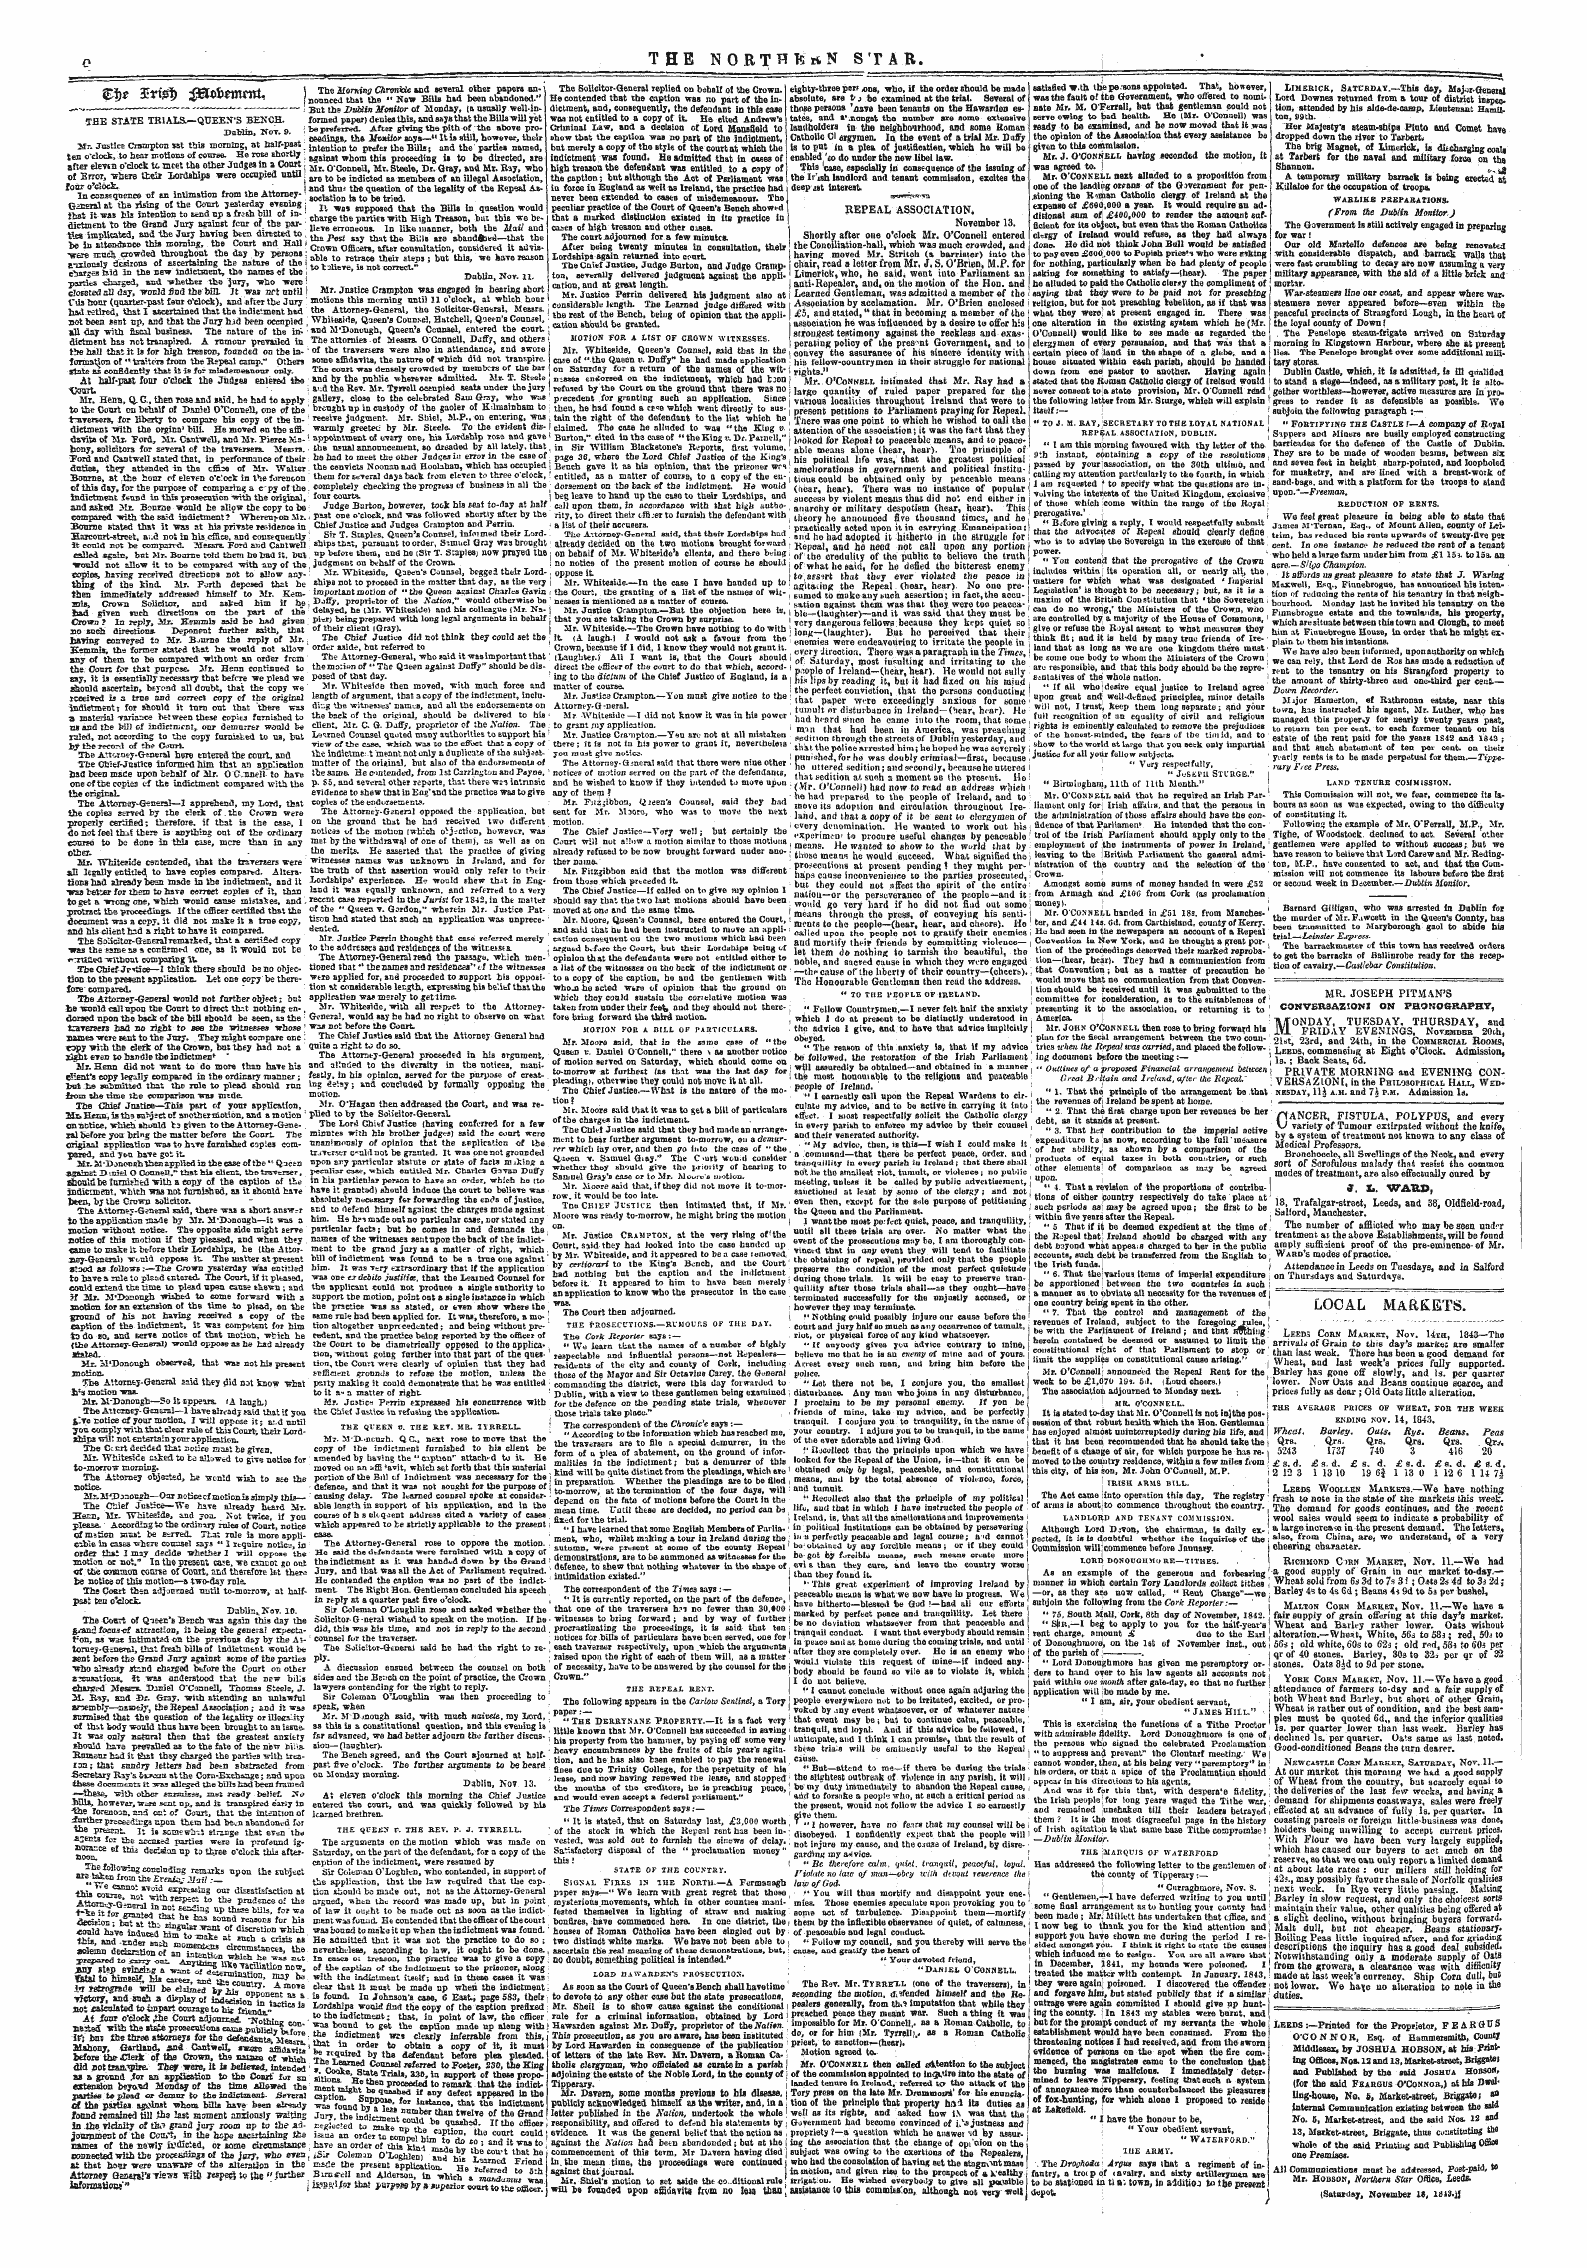 Northern Star (1837-1852): jS F Y, 4th edition - Mr. Joseph Pitman's Conversazioni On Phonography,